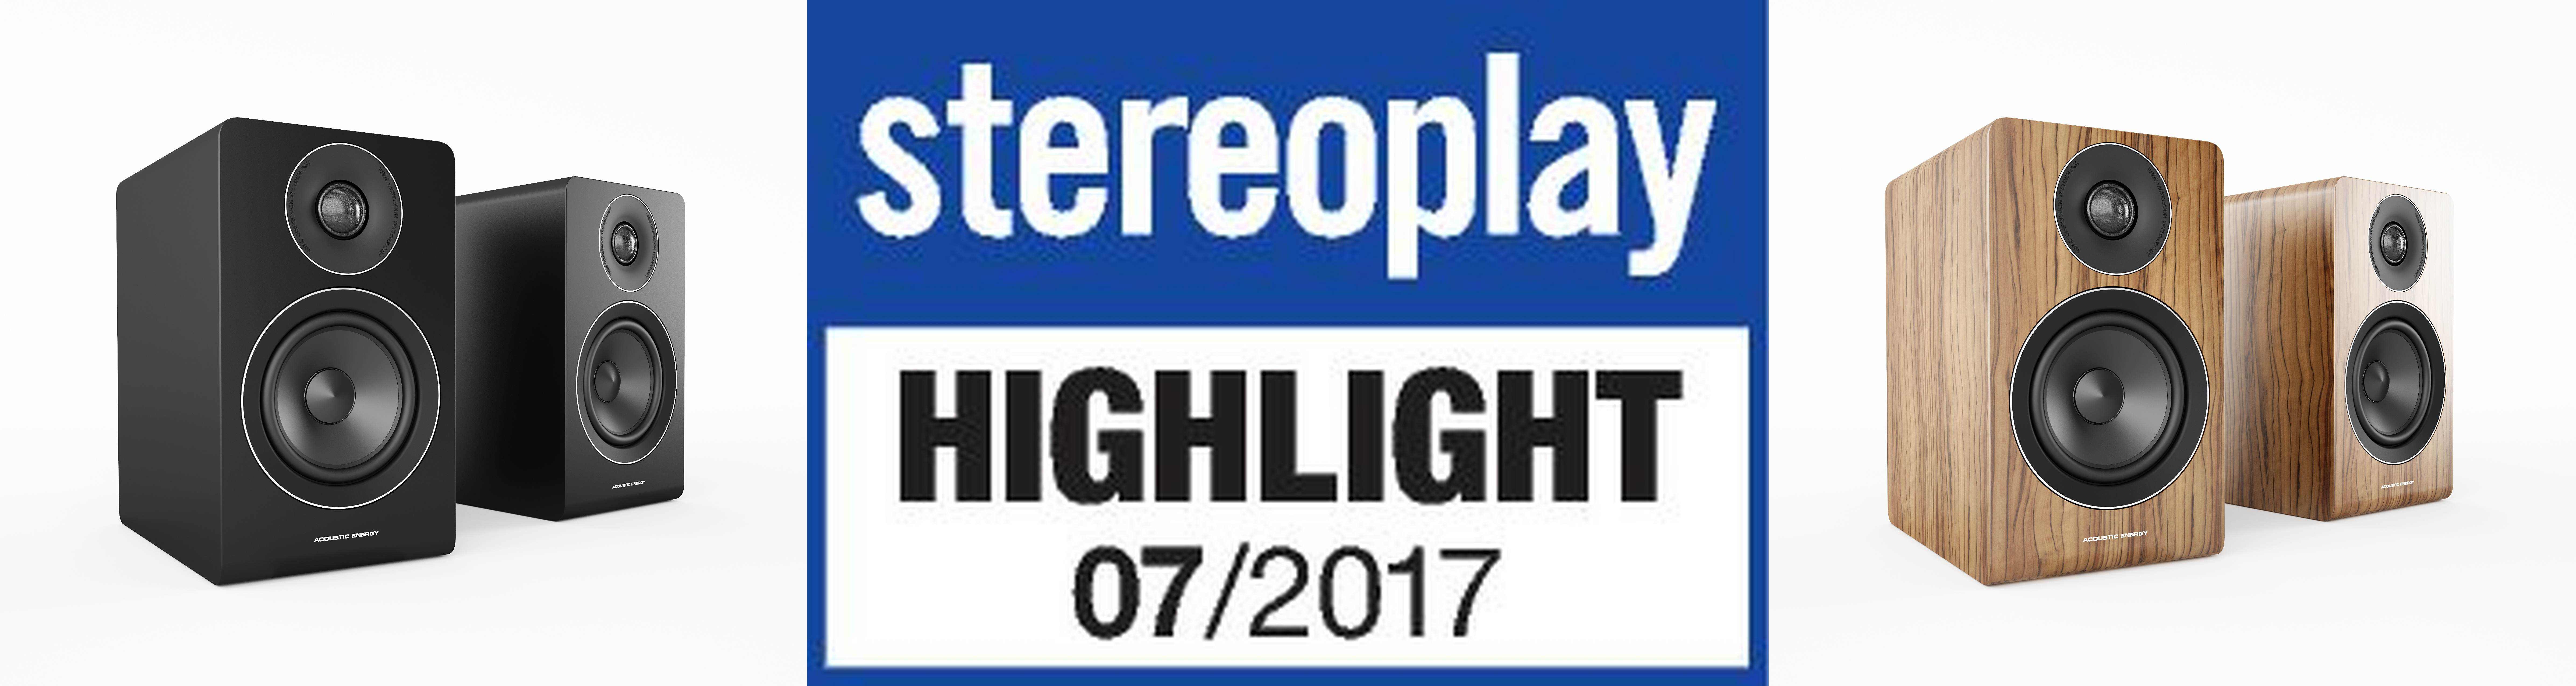 Acoustic Energy AE 100 - Highlight Stereoplay stereoplay-Highlight \ Kompaktlautsprecher